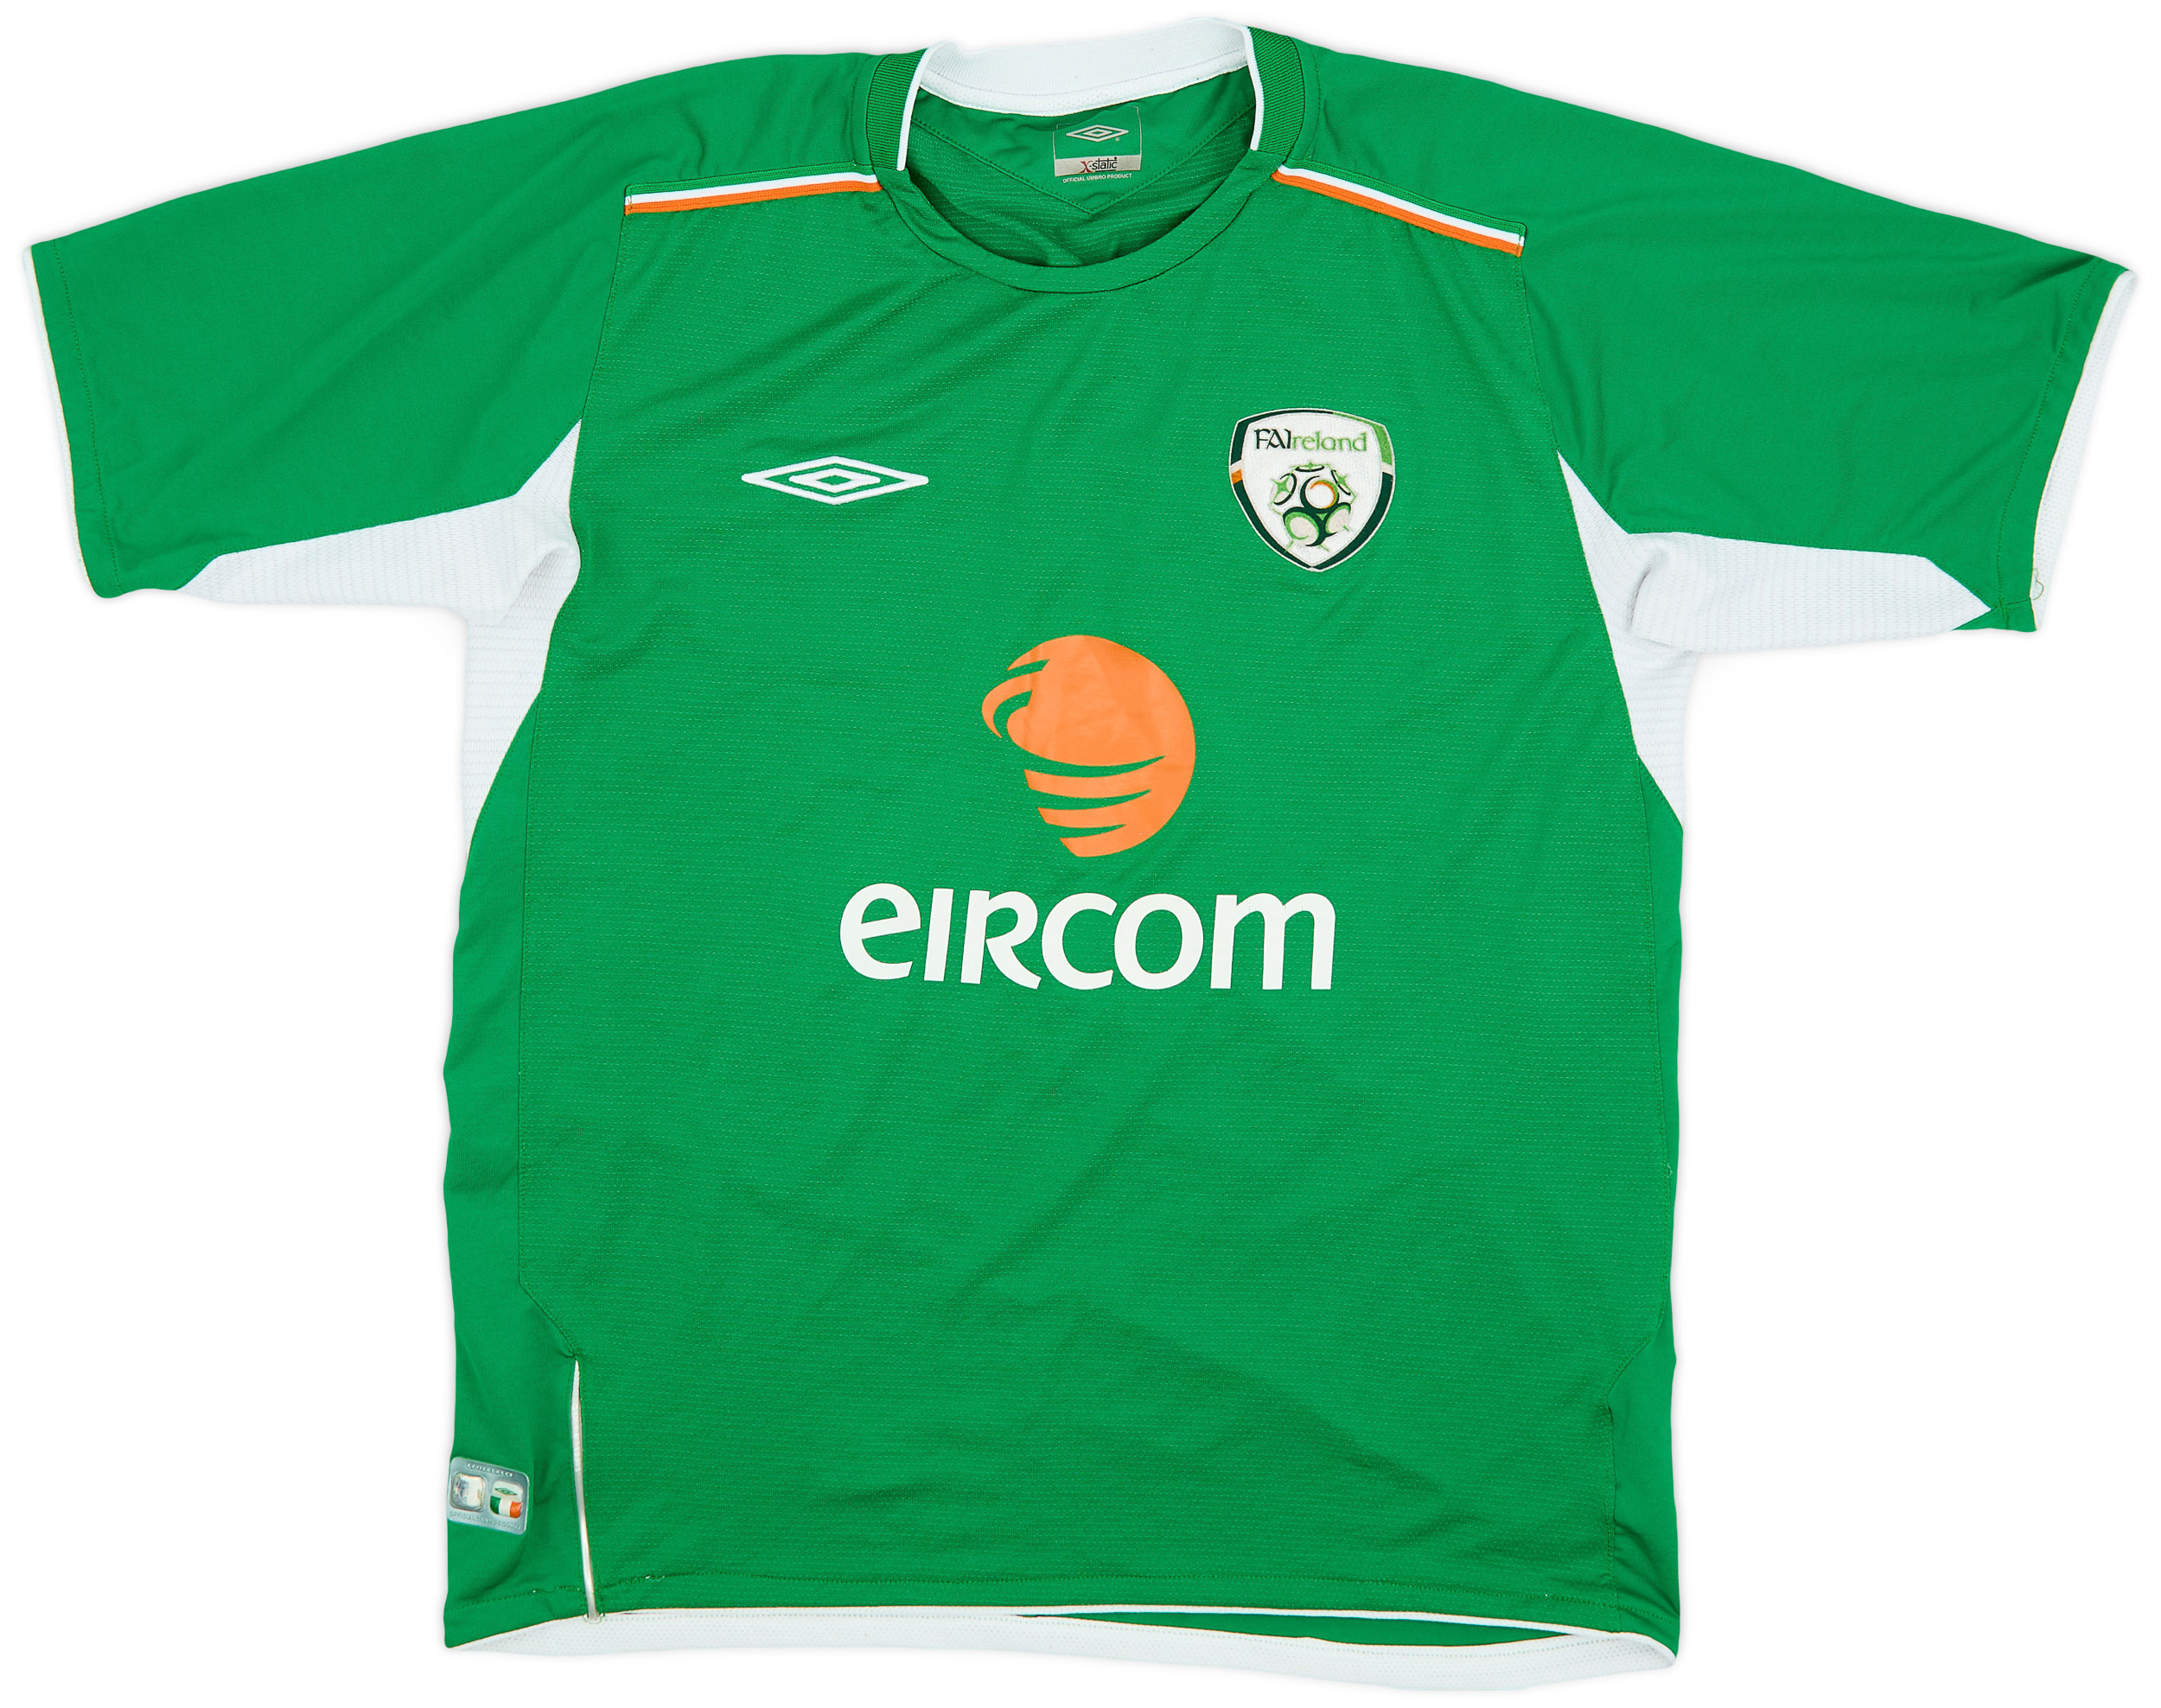 2004-06 Republic of Ireland Home Shirt - 8/10 - ()